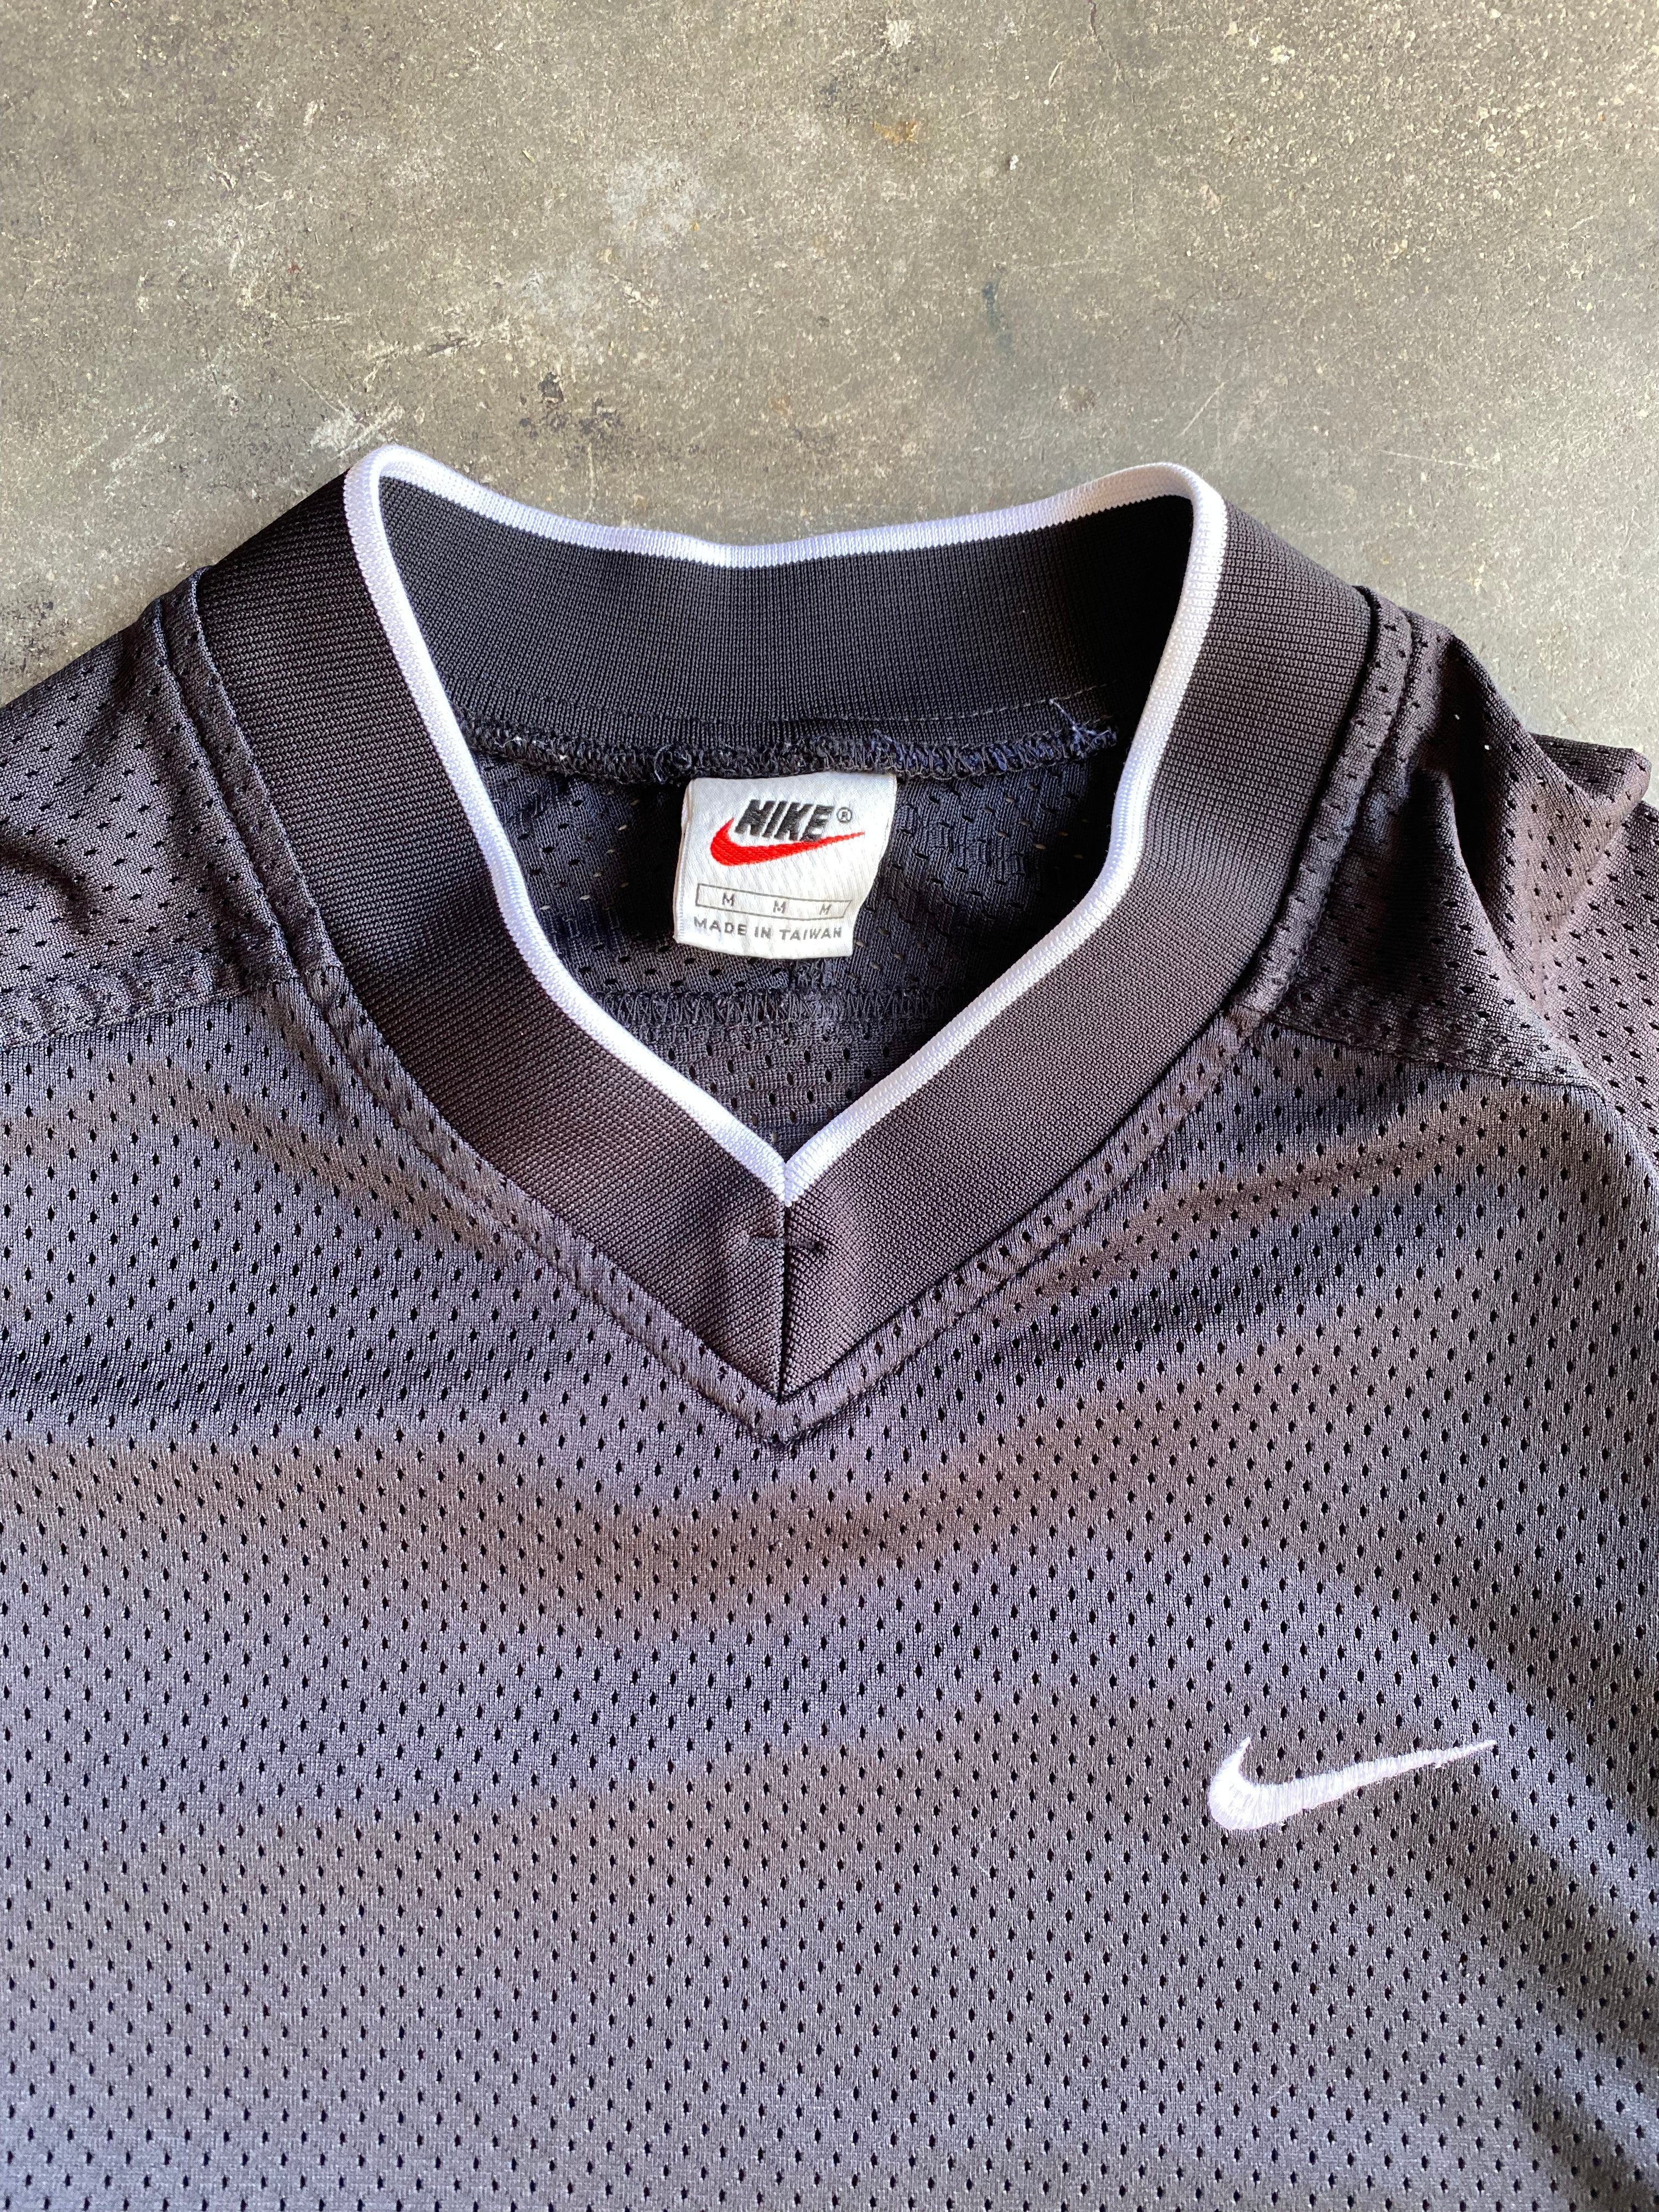 Vintage Nike Jersey - M